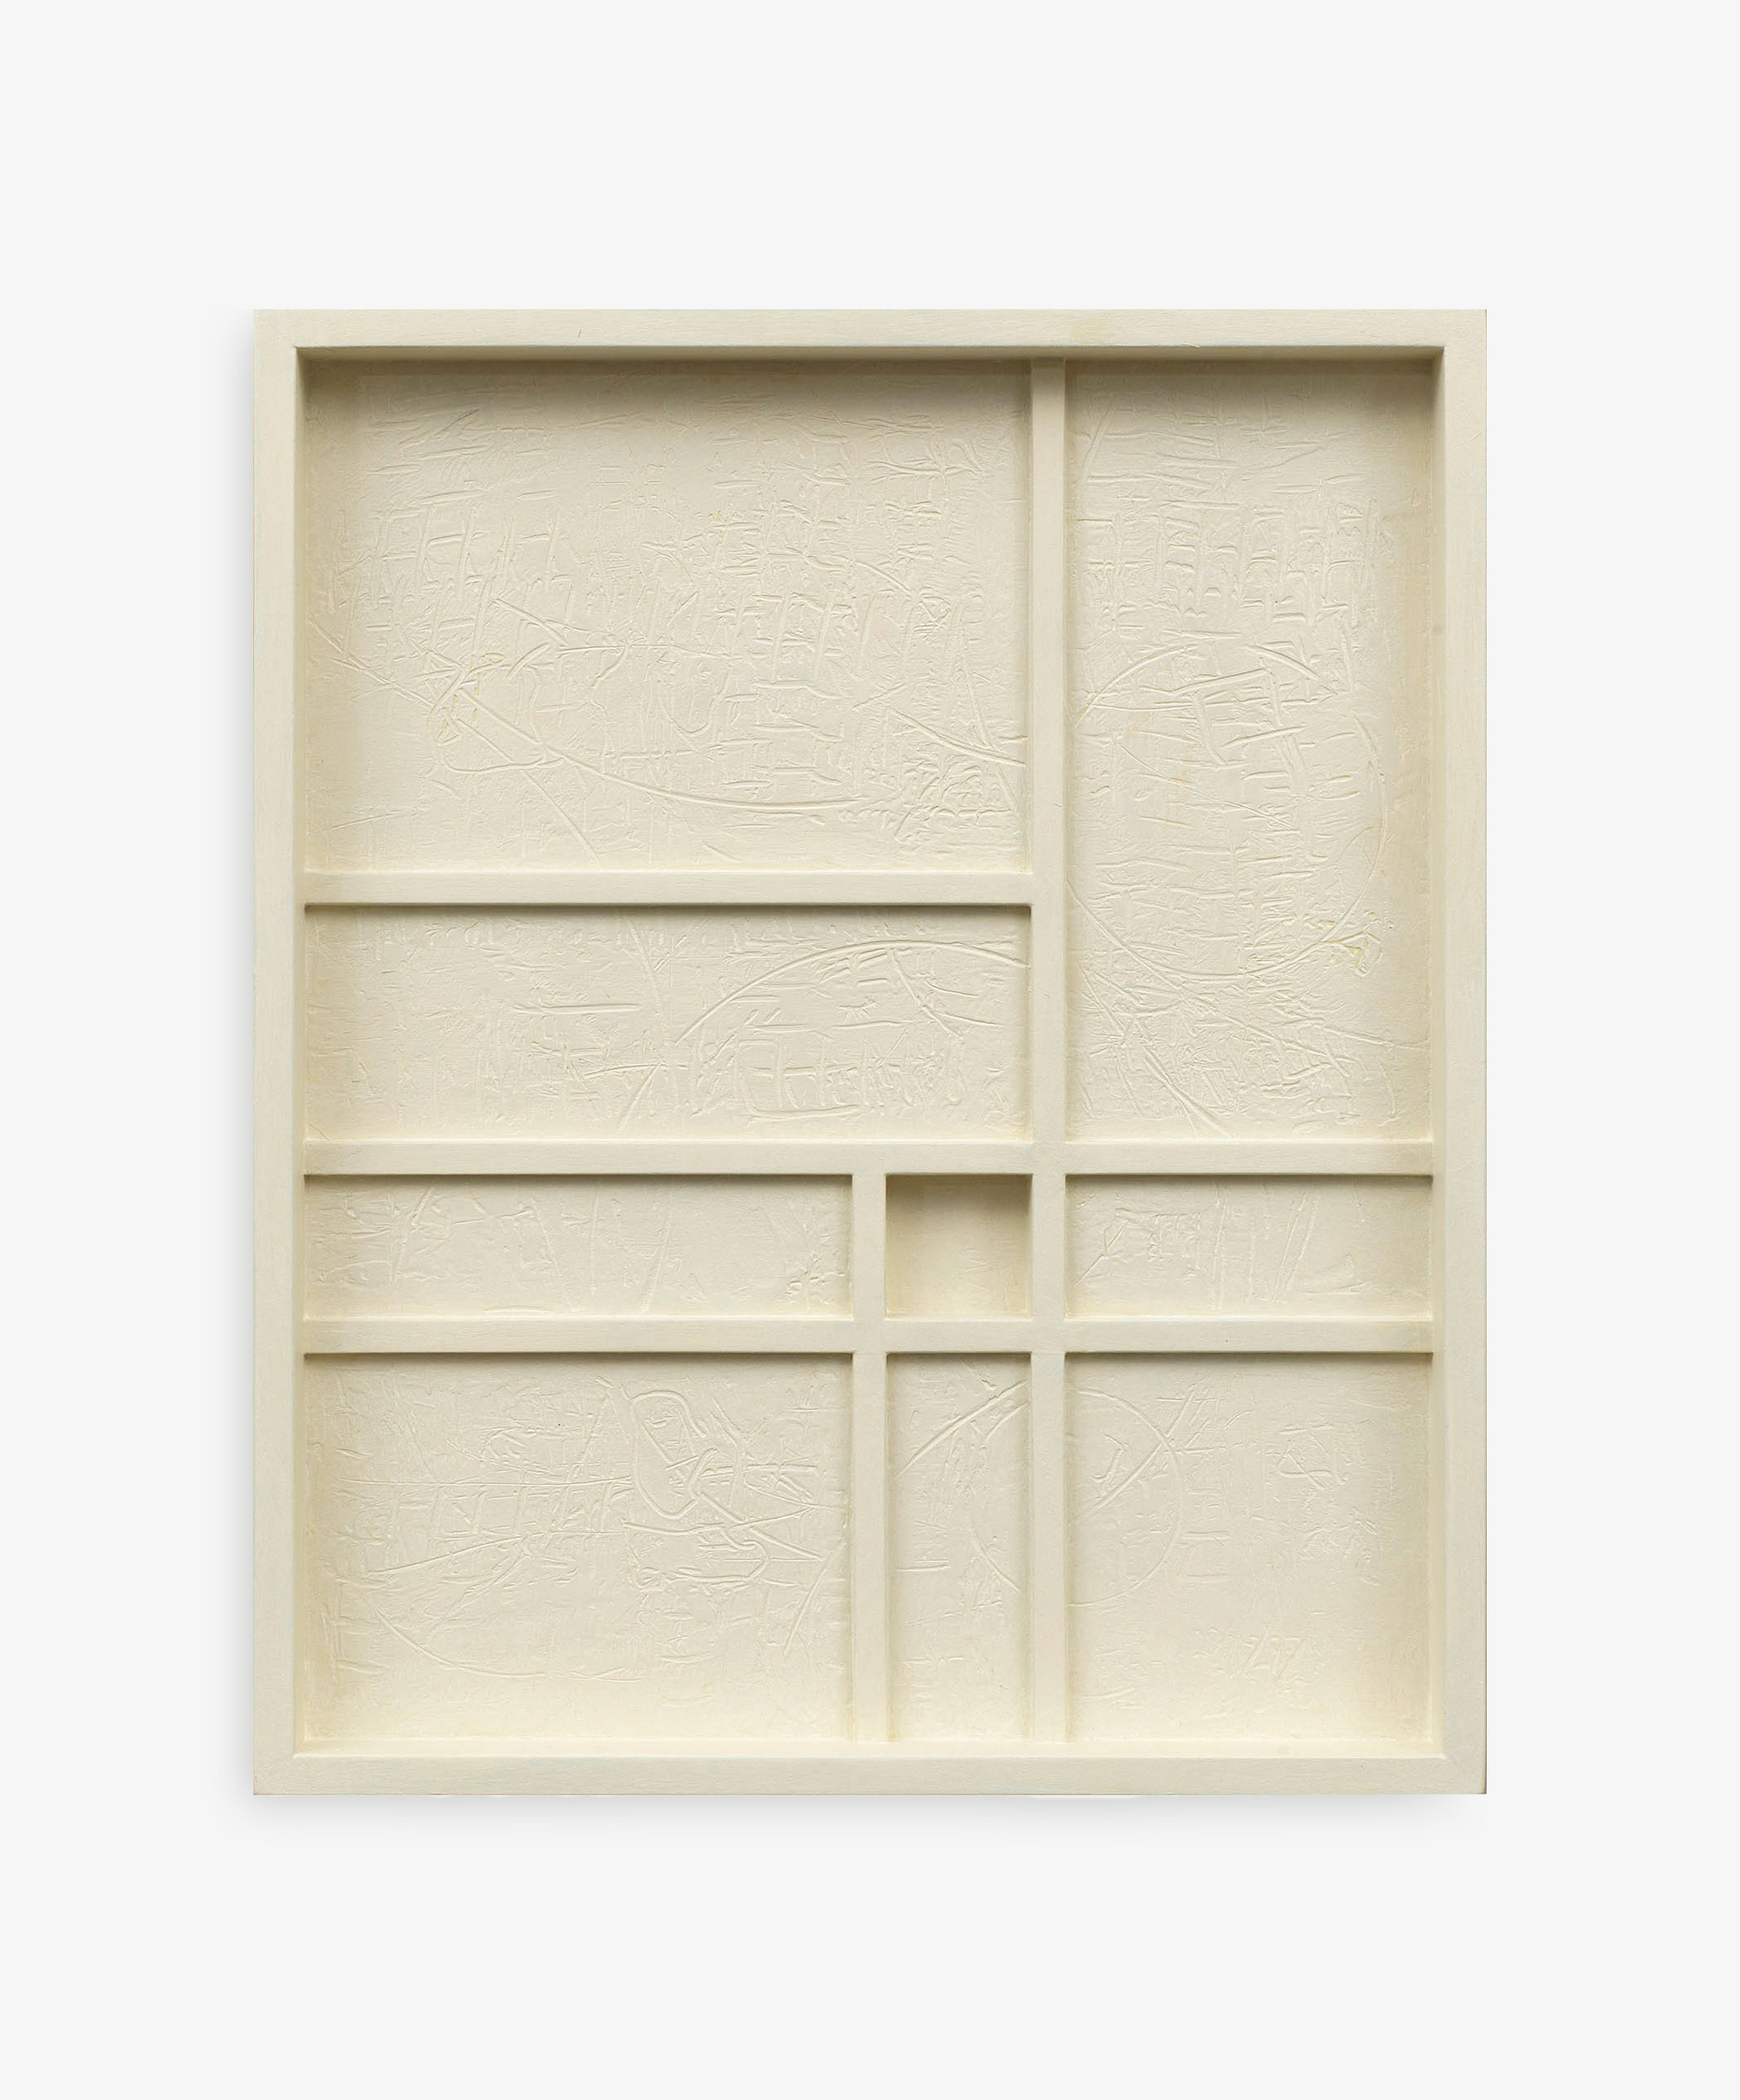 John Pittman, Albers Square, 2020, Alkyd/Wood Relief, 21.59 x 17.78 x 3.81 cm © The Artist via Regards Gallery